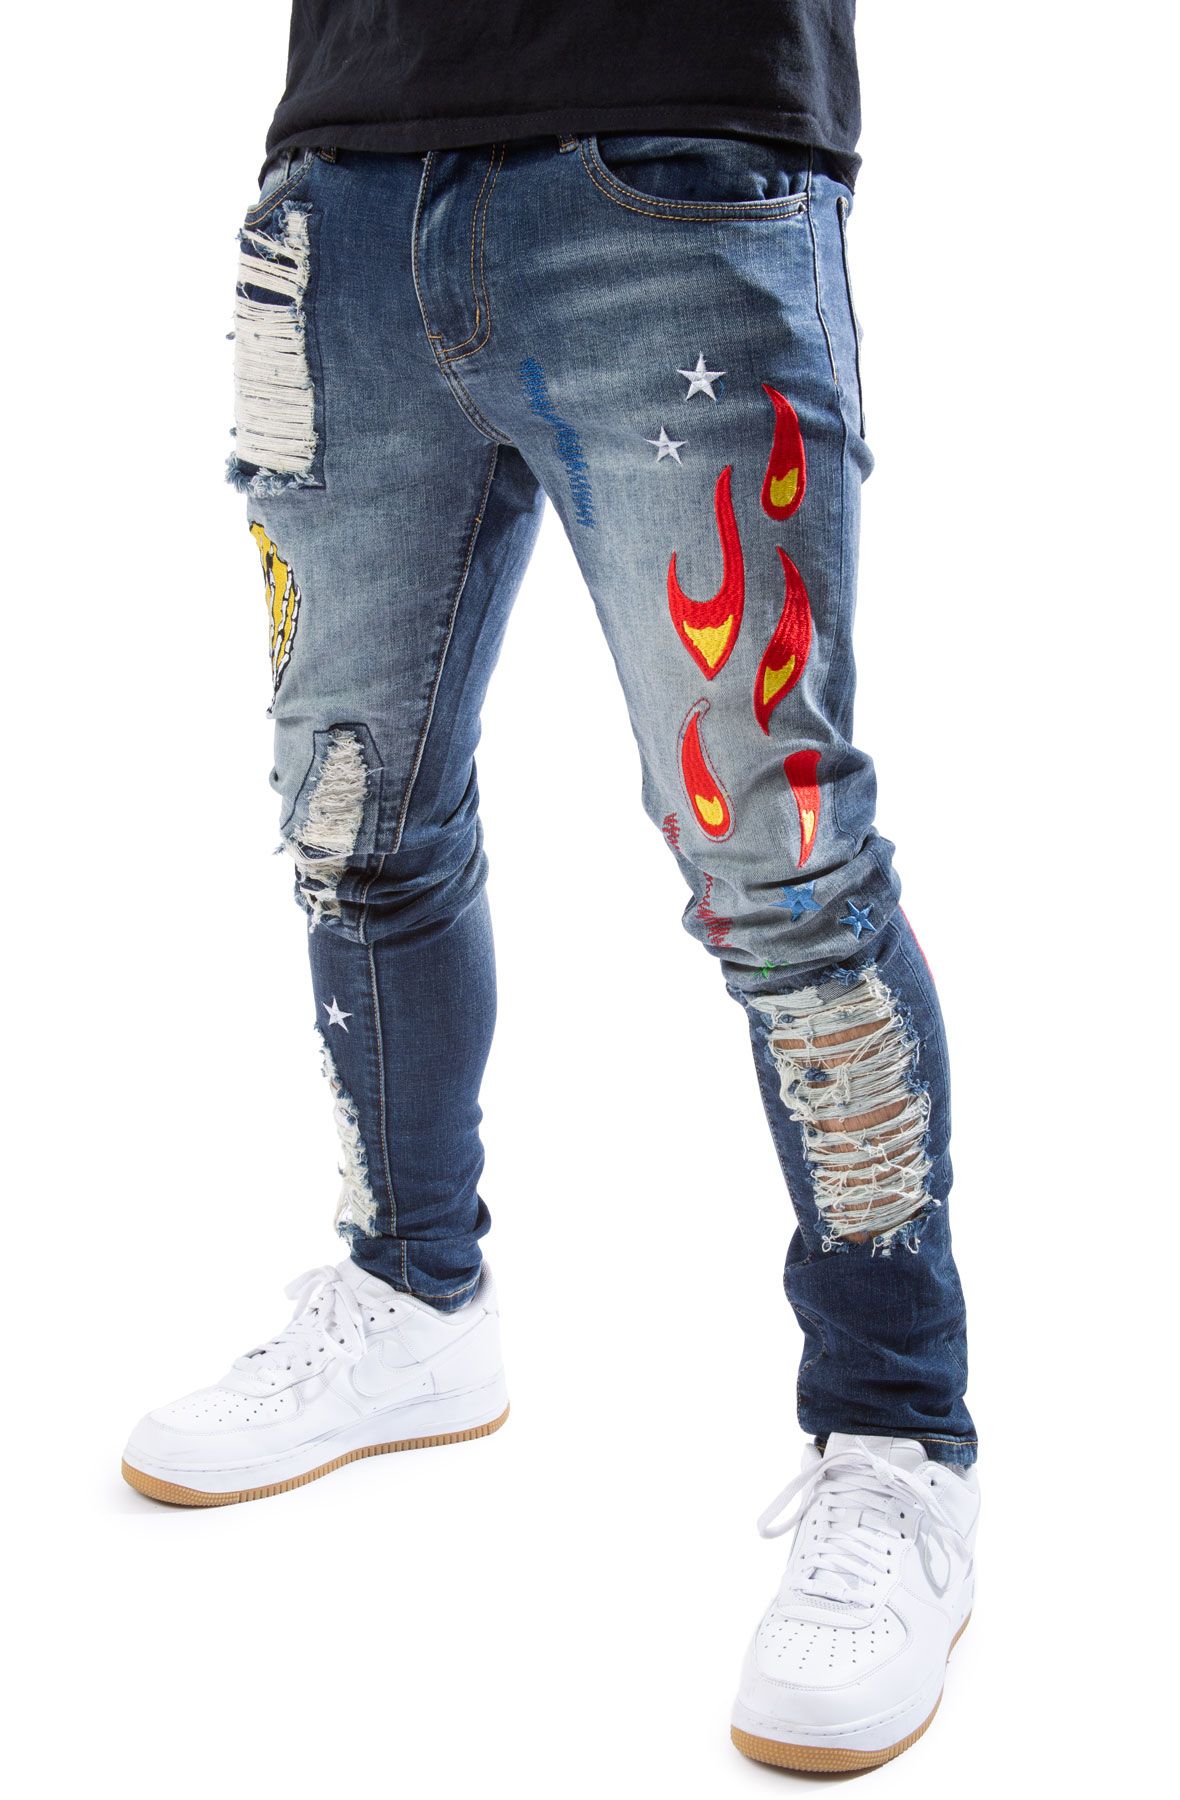 CRYSP DENIM Hagan Flame Patch Jeans CRYSPF121-110 - Shiekh